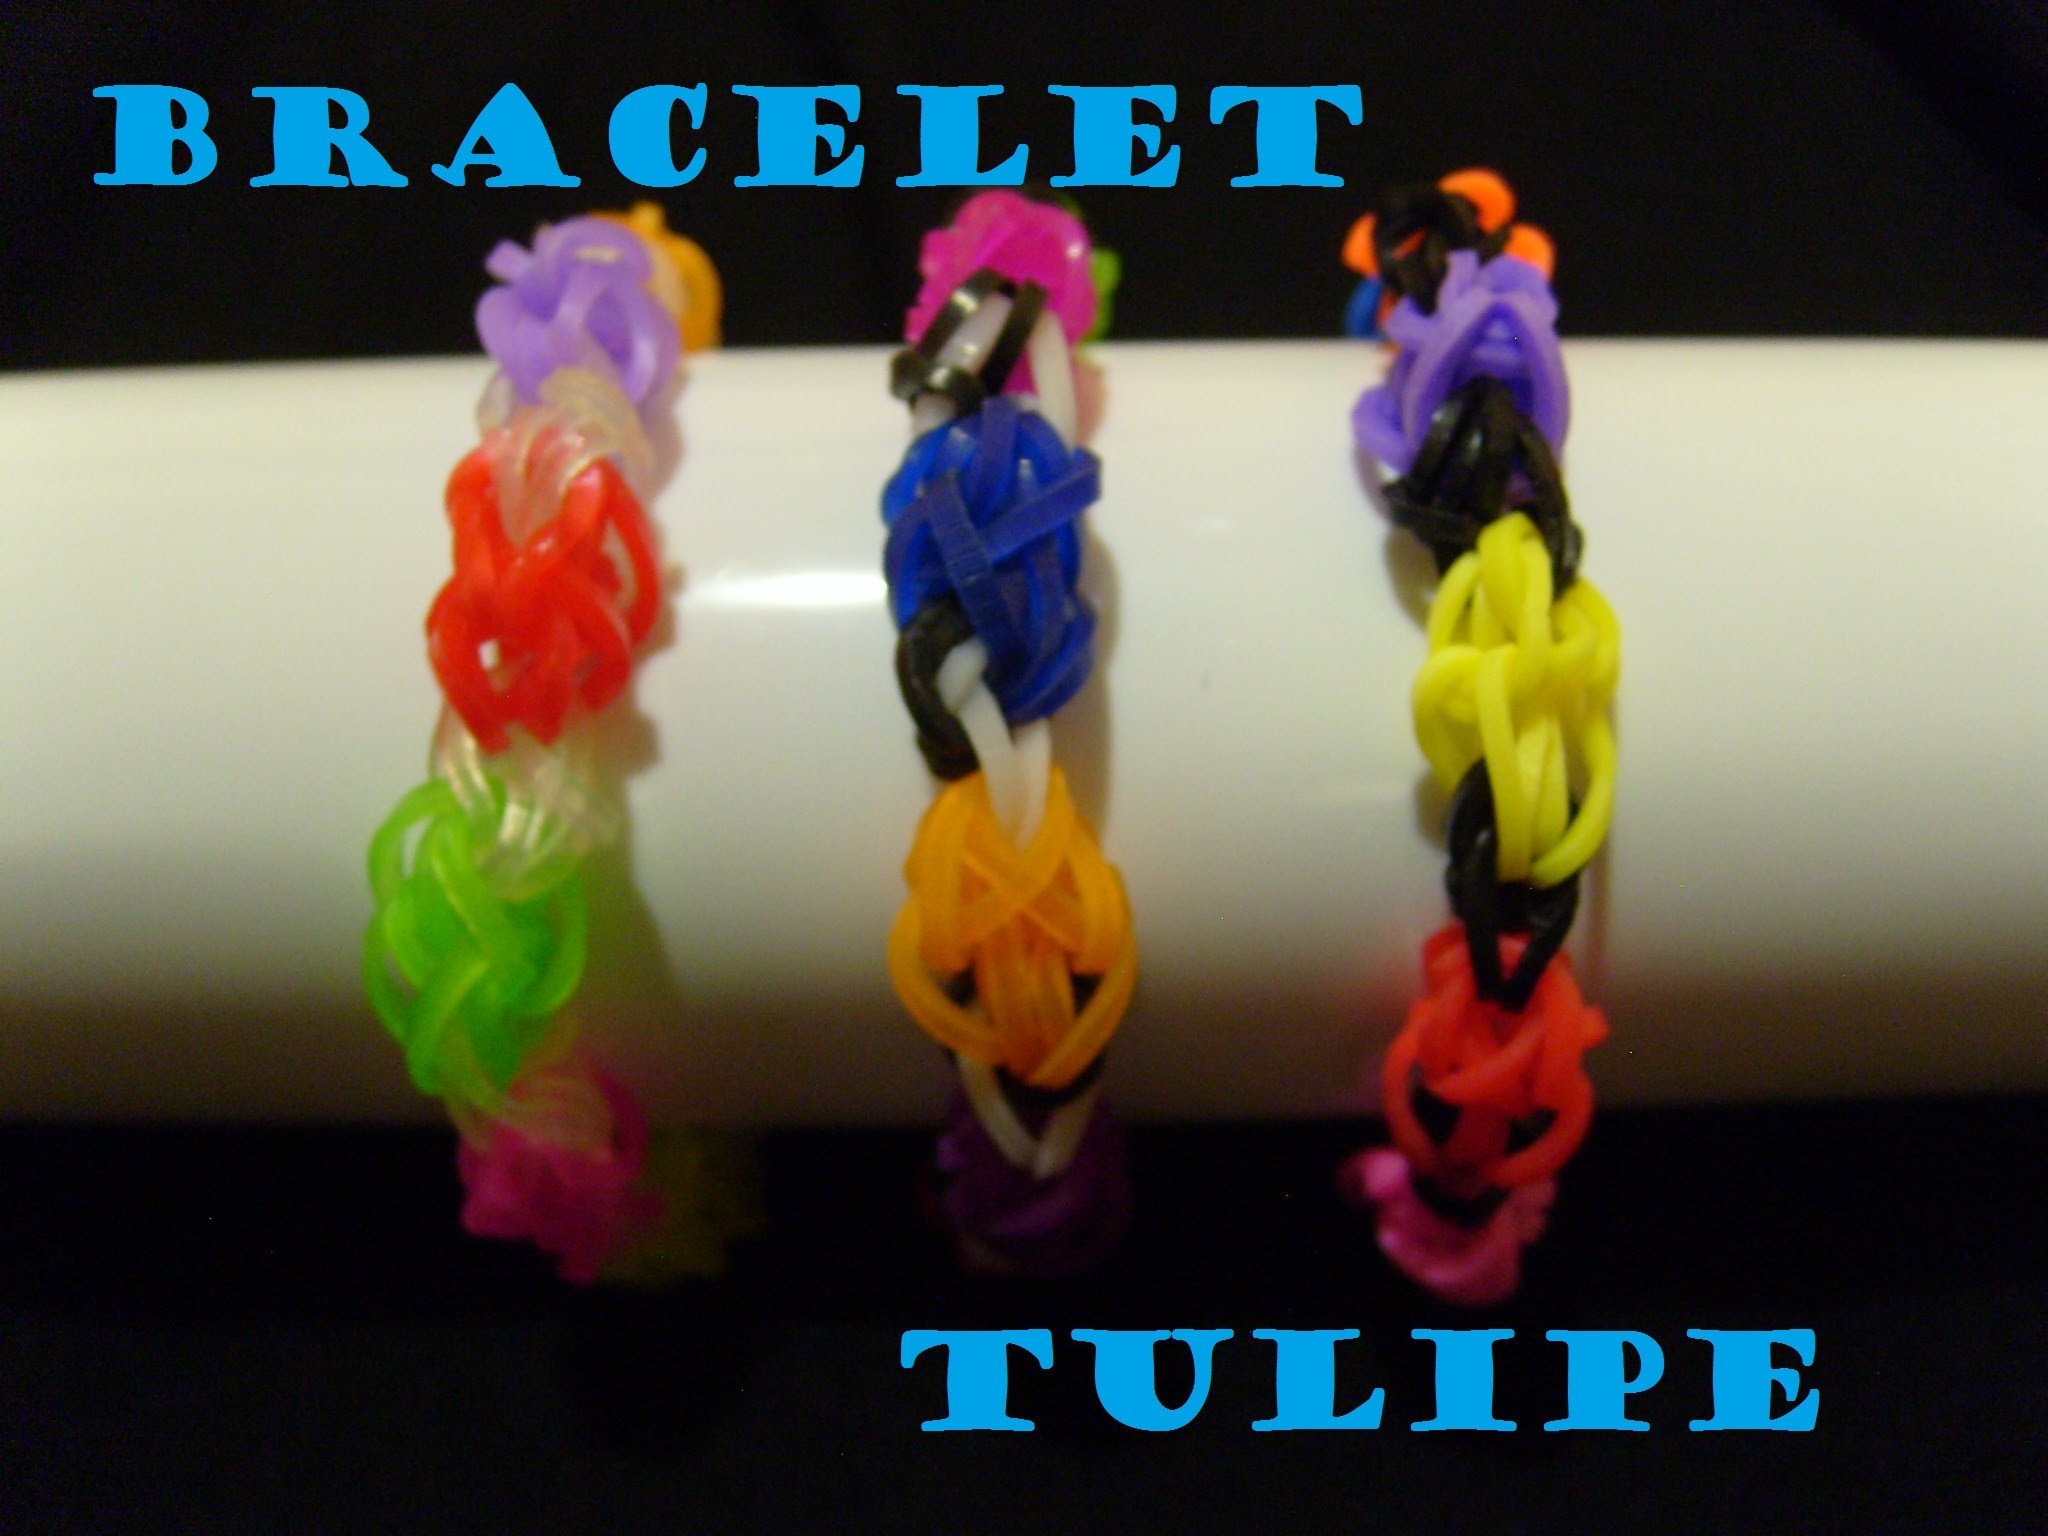 Bracelet elastique tulipe, tuto francais, rainbow loom bands